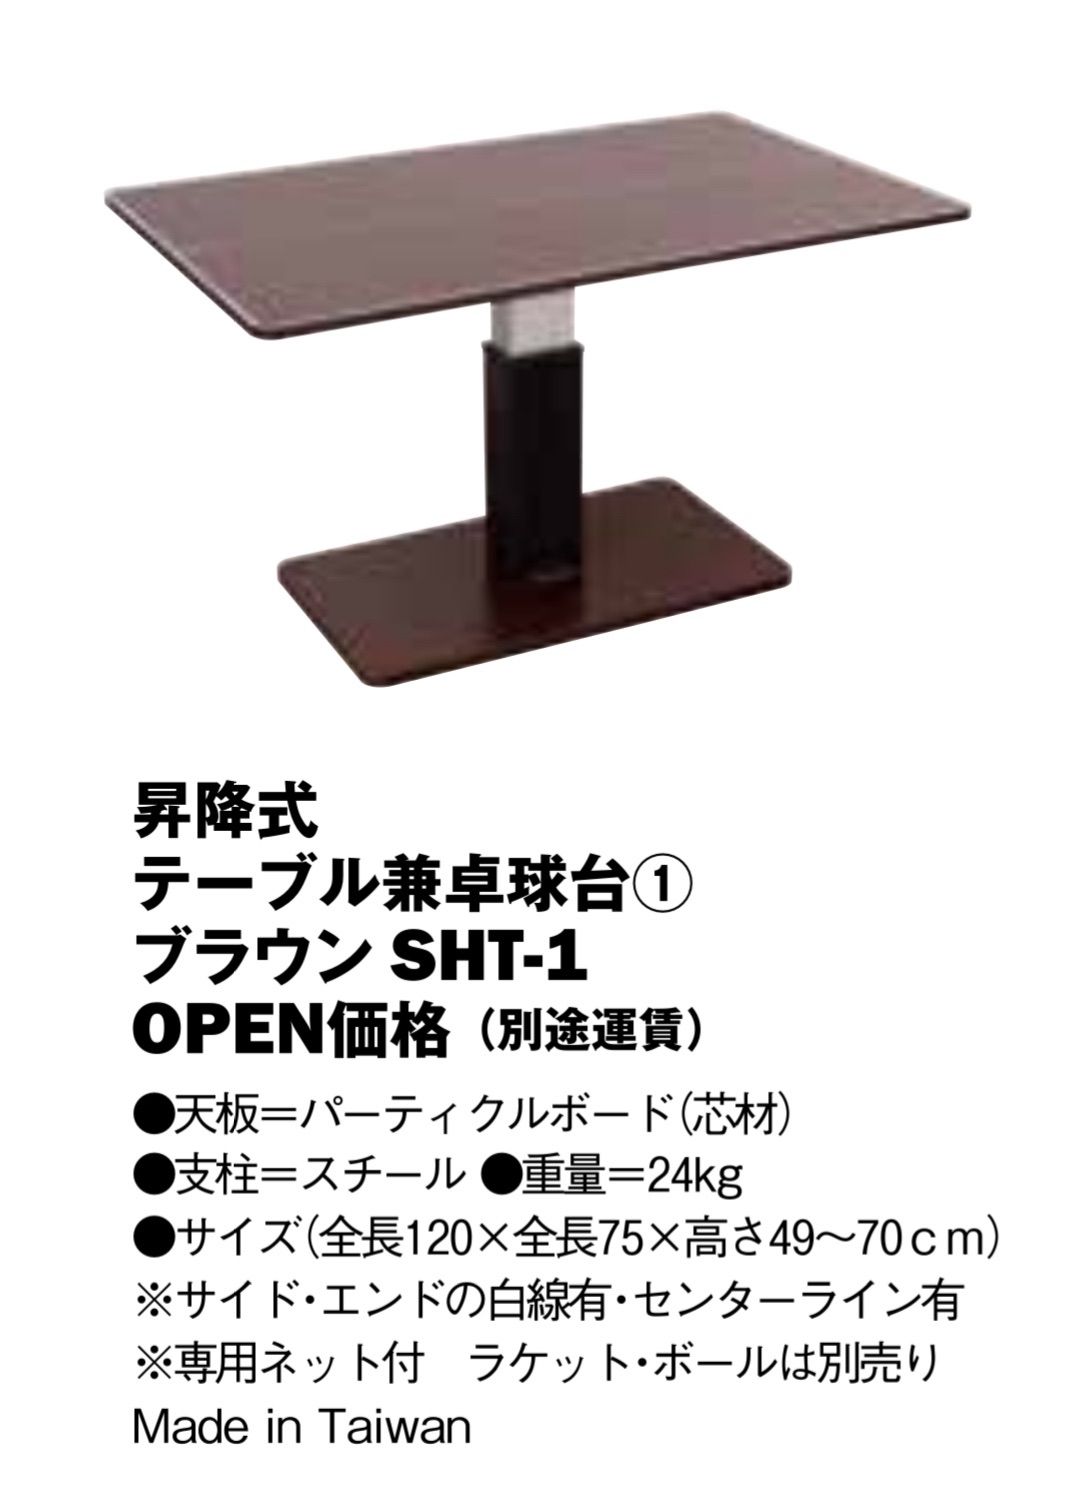 UNIVER 昇降式テーブル兼卓球台 - メルカリ